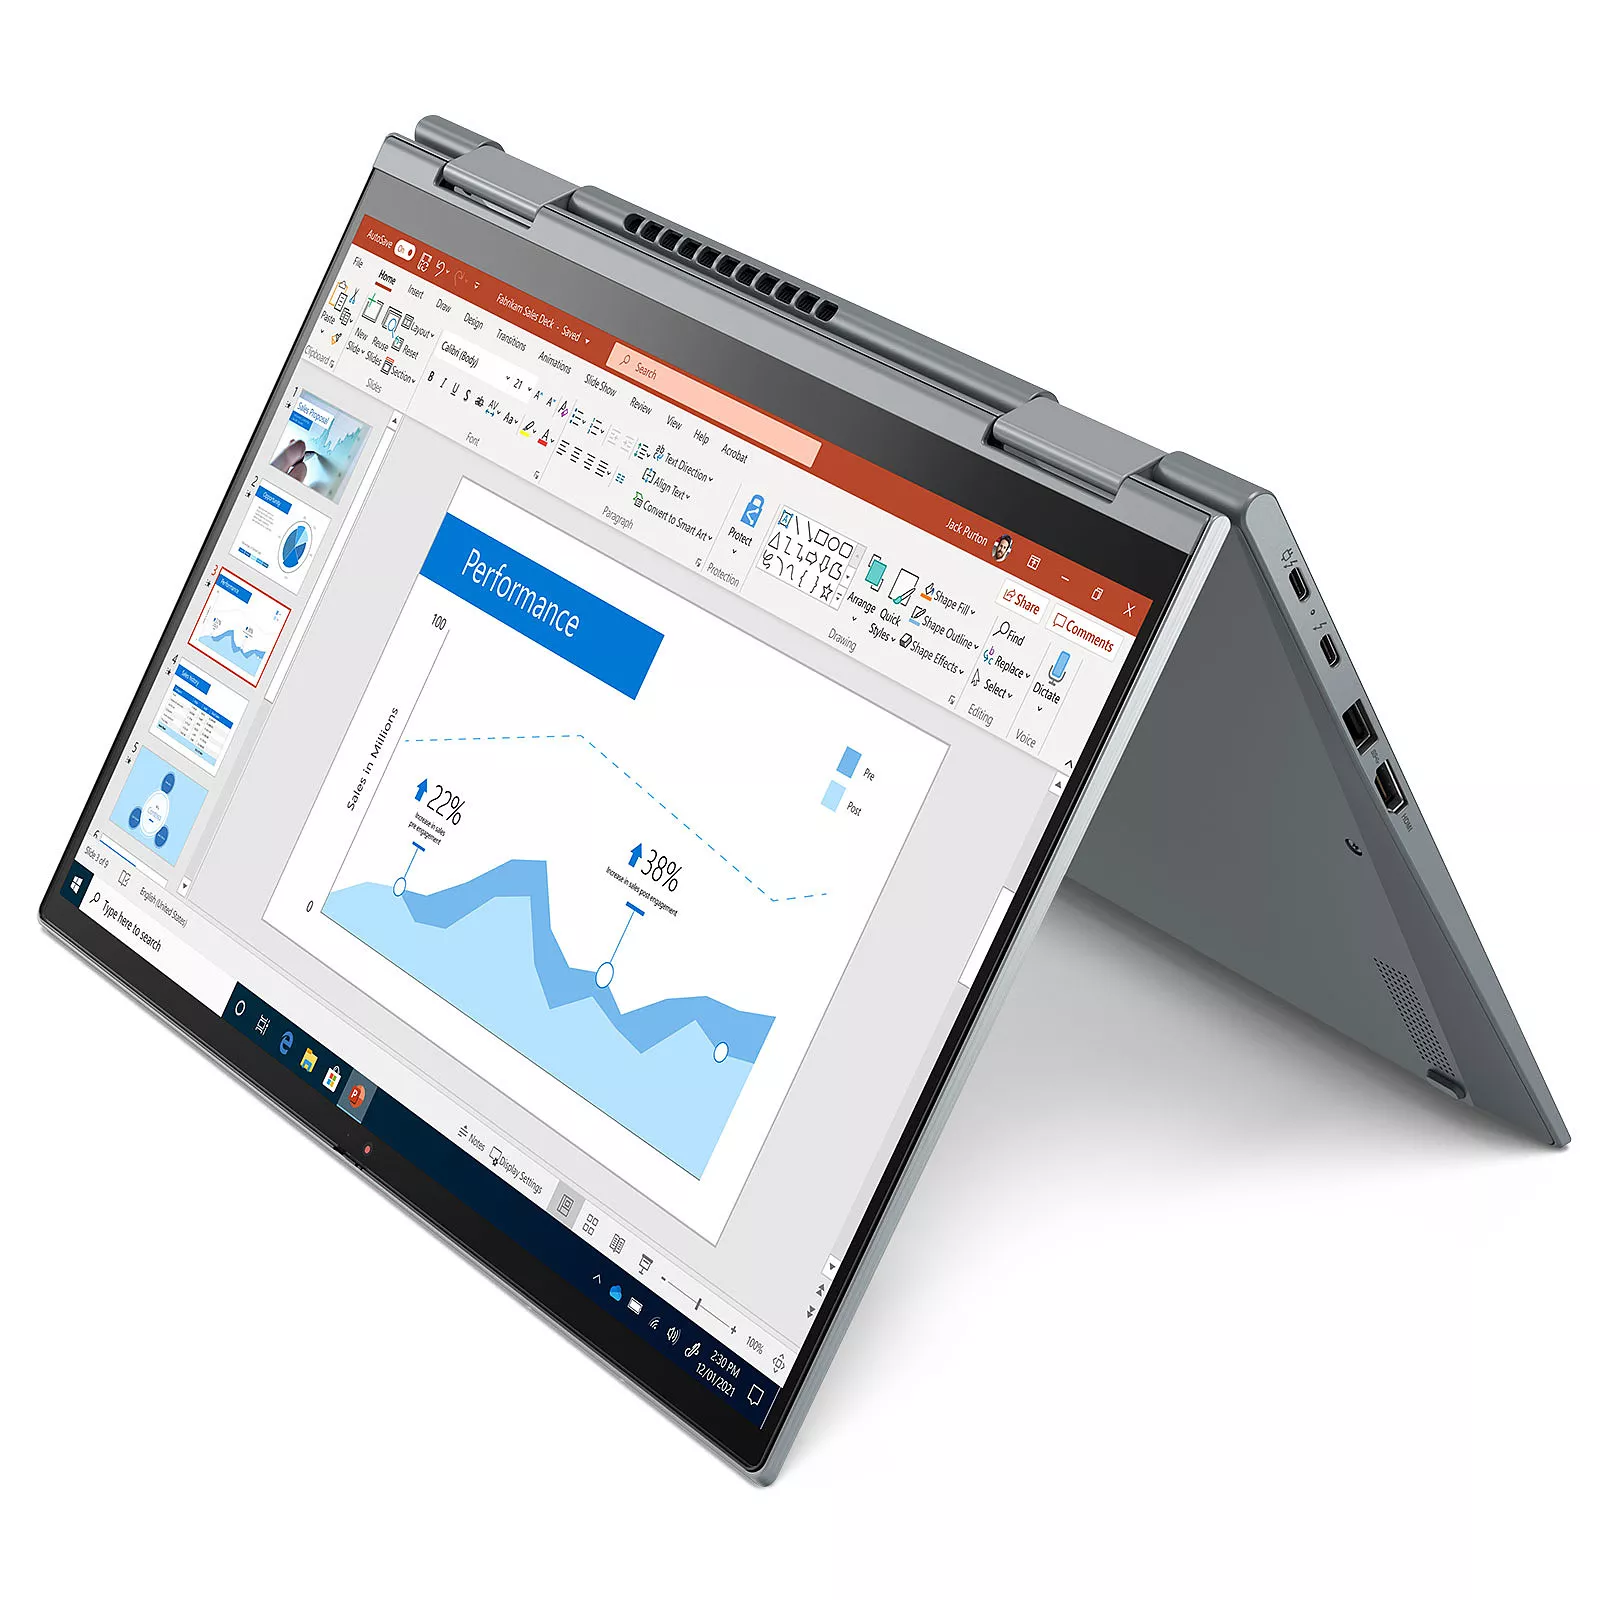 Lenovo ThinkPad X1 Yoga Gen 6 | i7-1165G7 | 16 GB Ram | 1 TB SSD